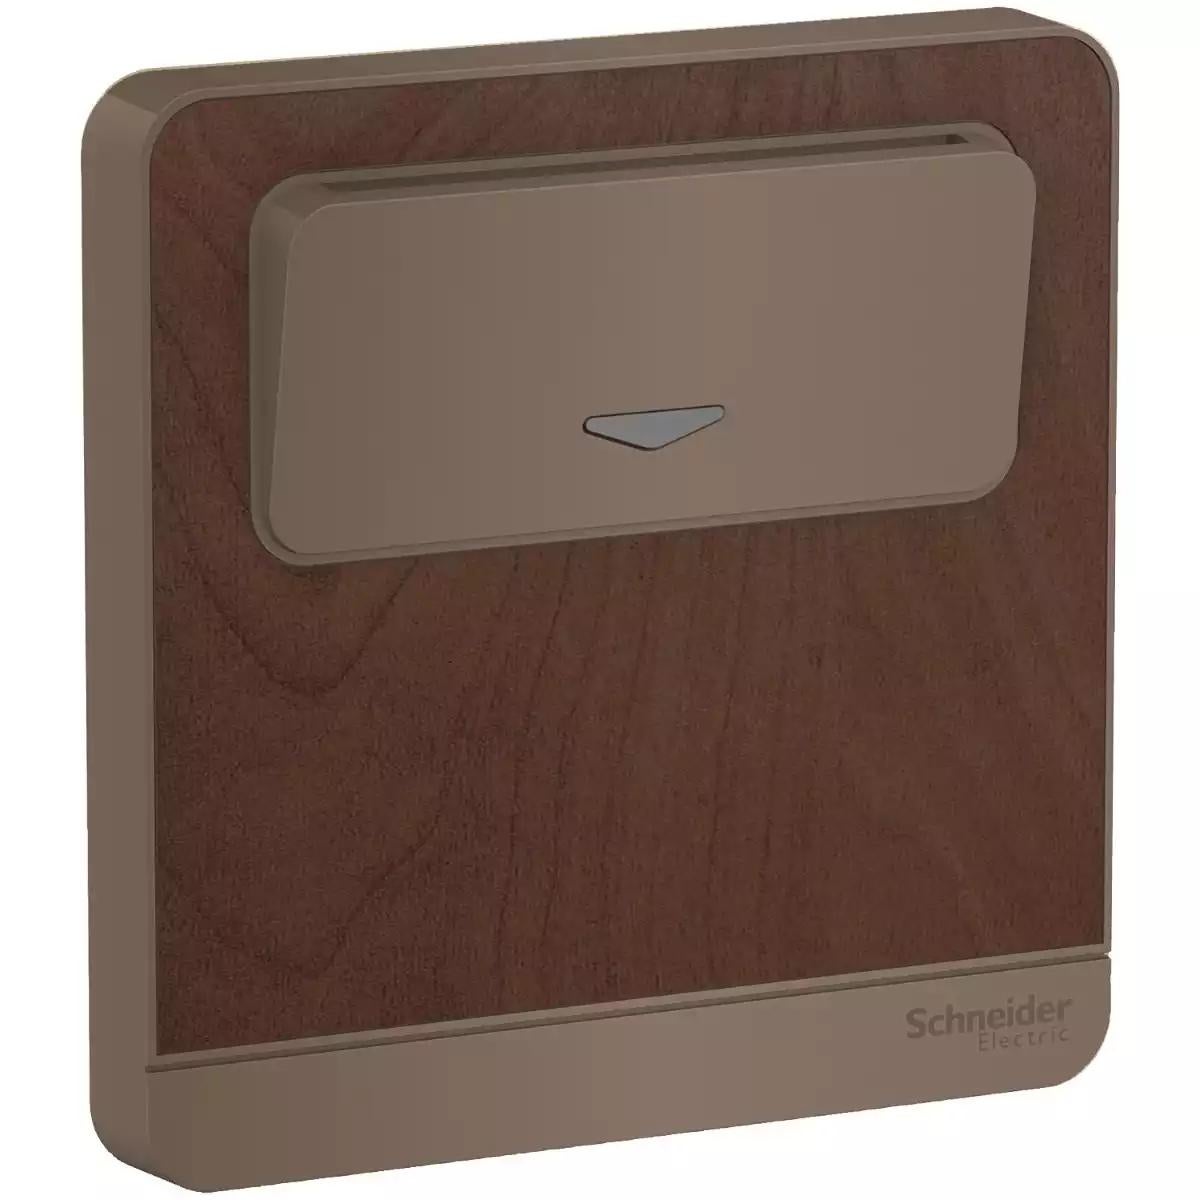 Schneider Electric AvatarOn card switch, 16 A, 250 V, Wood